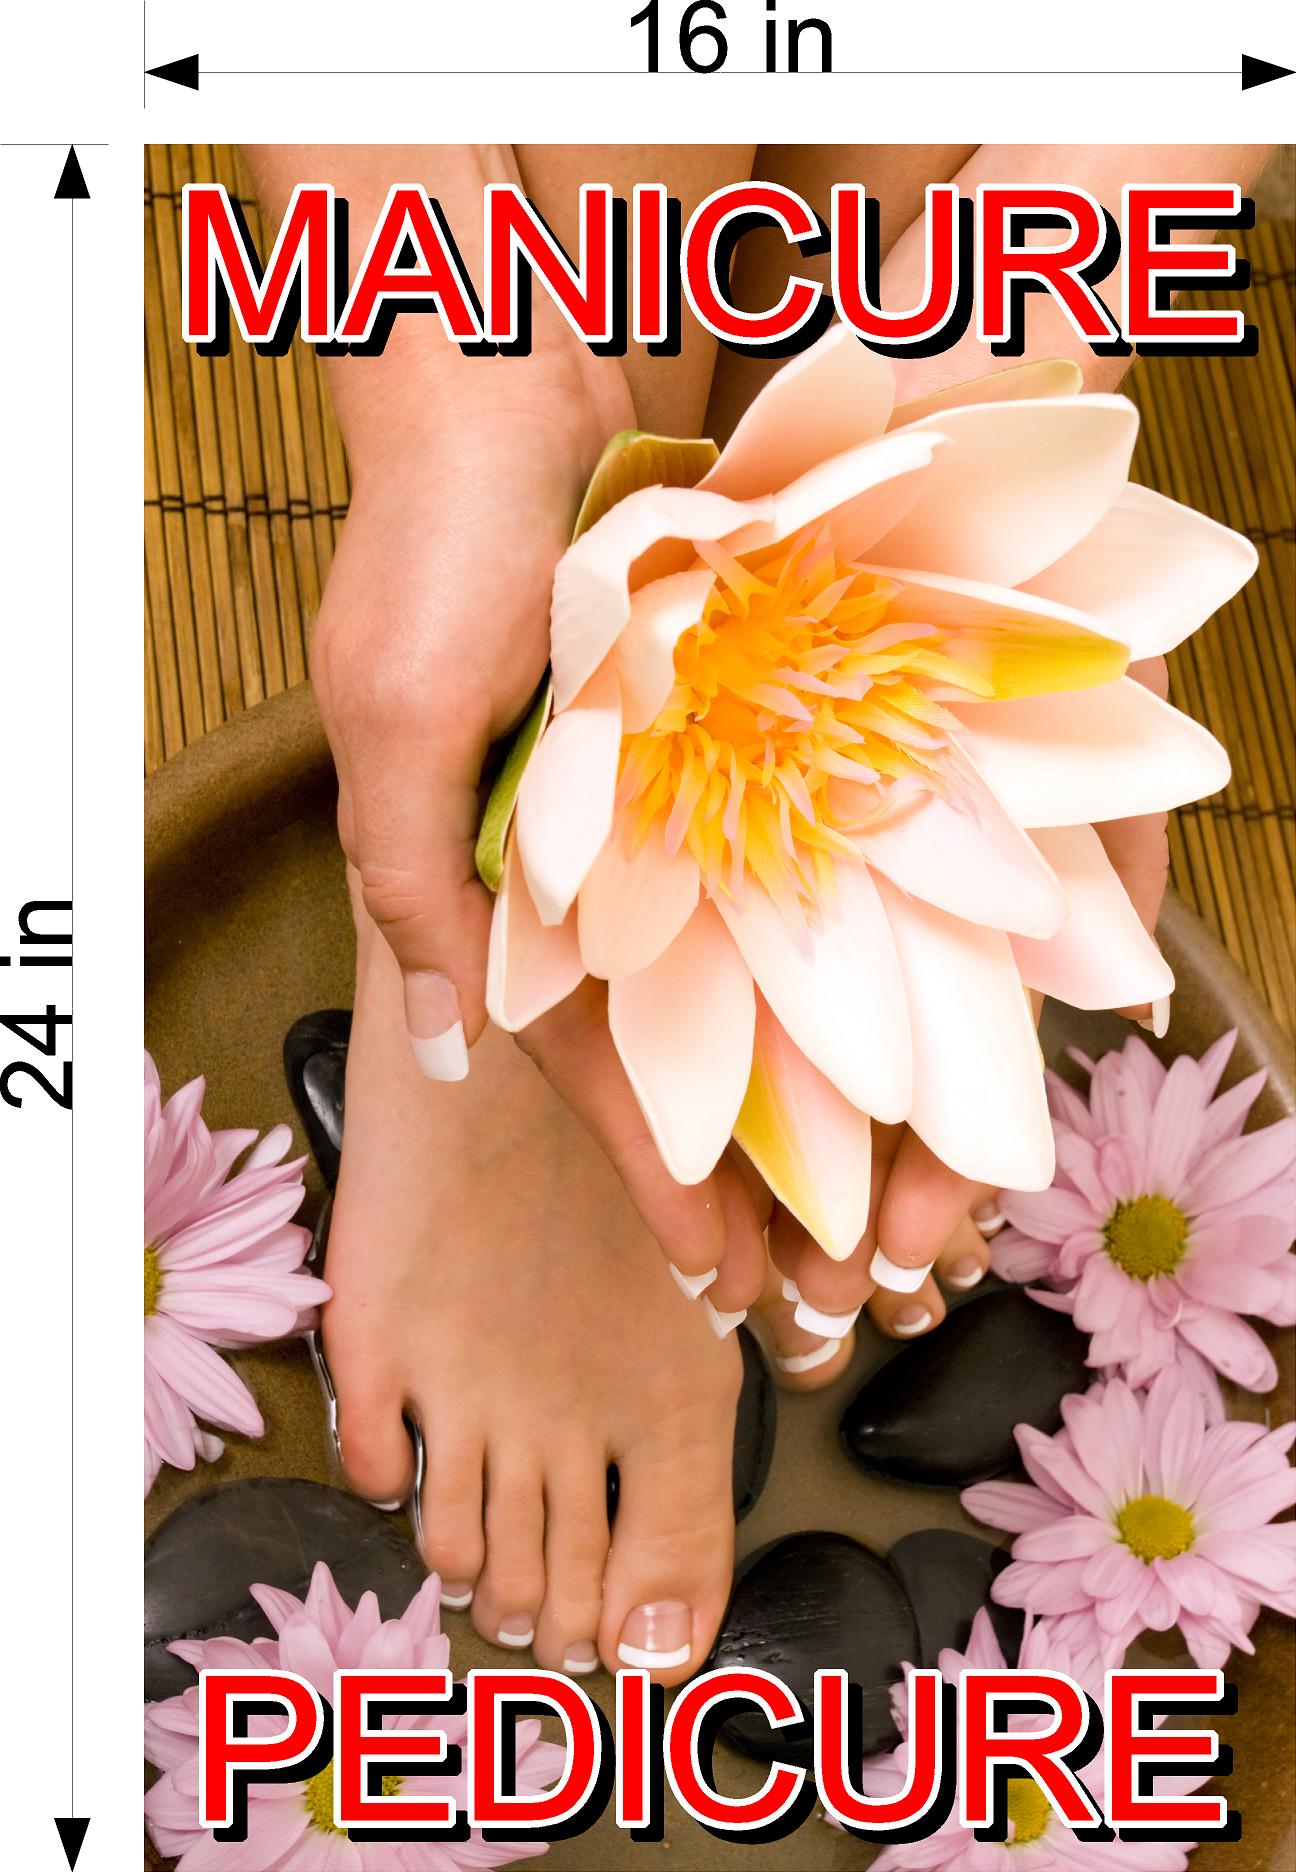 Pedicure & Manicure 17 Photo-Realistic Paper Poster Premium Matte Interior Inside Sign Advertising Marketing Wall Window Non-Laminated Vertical